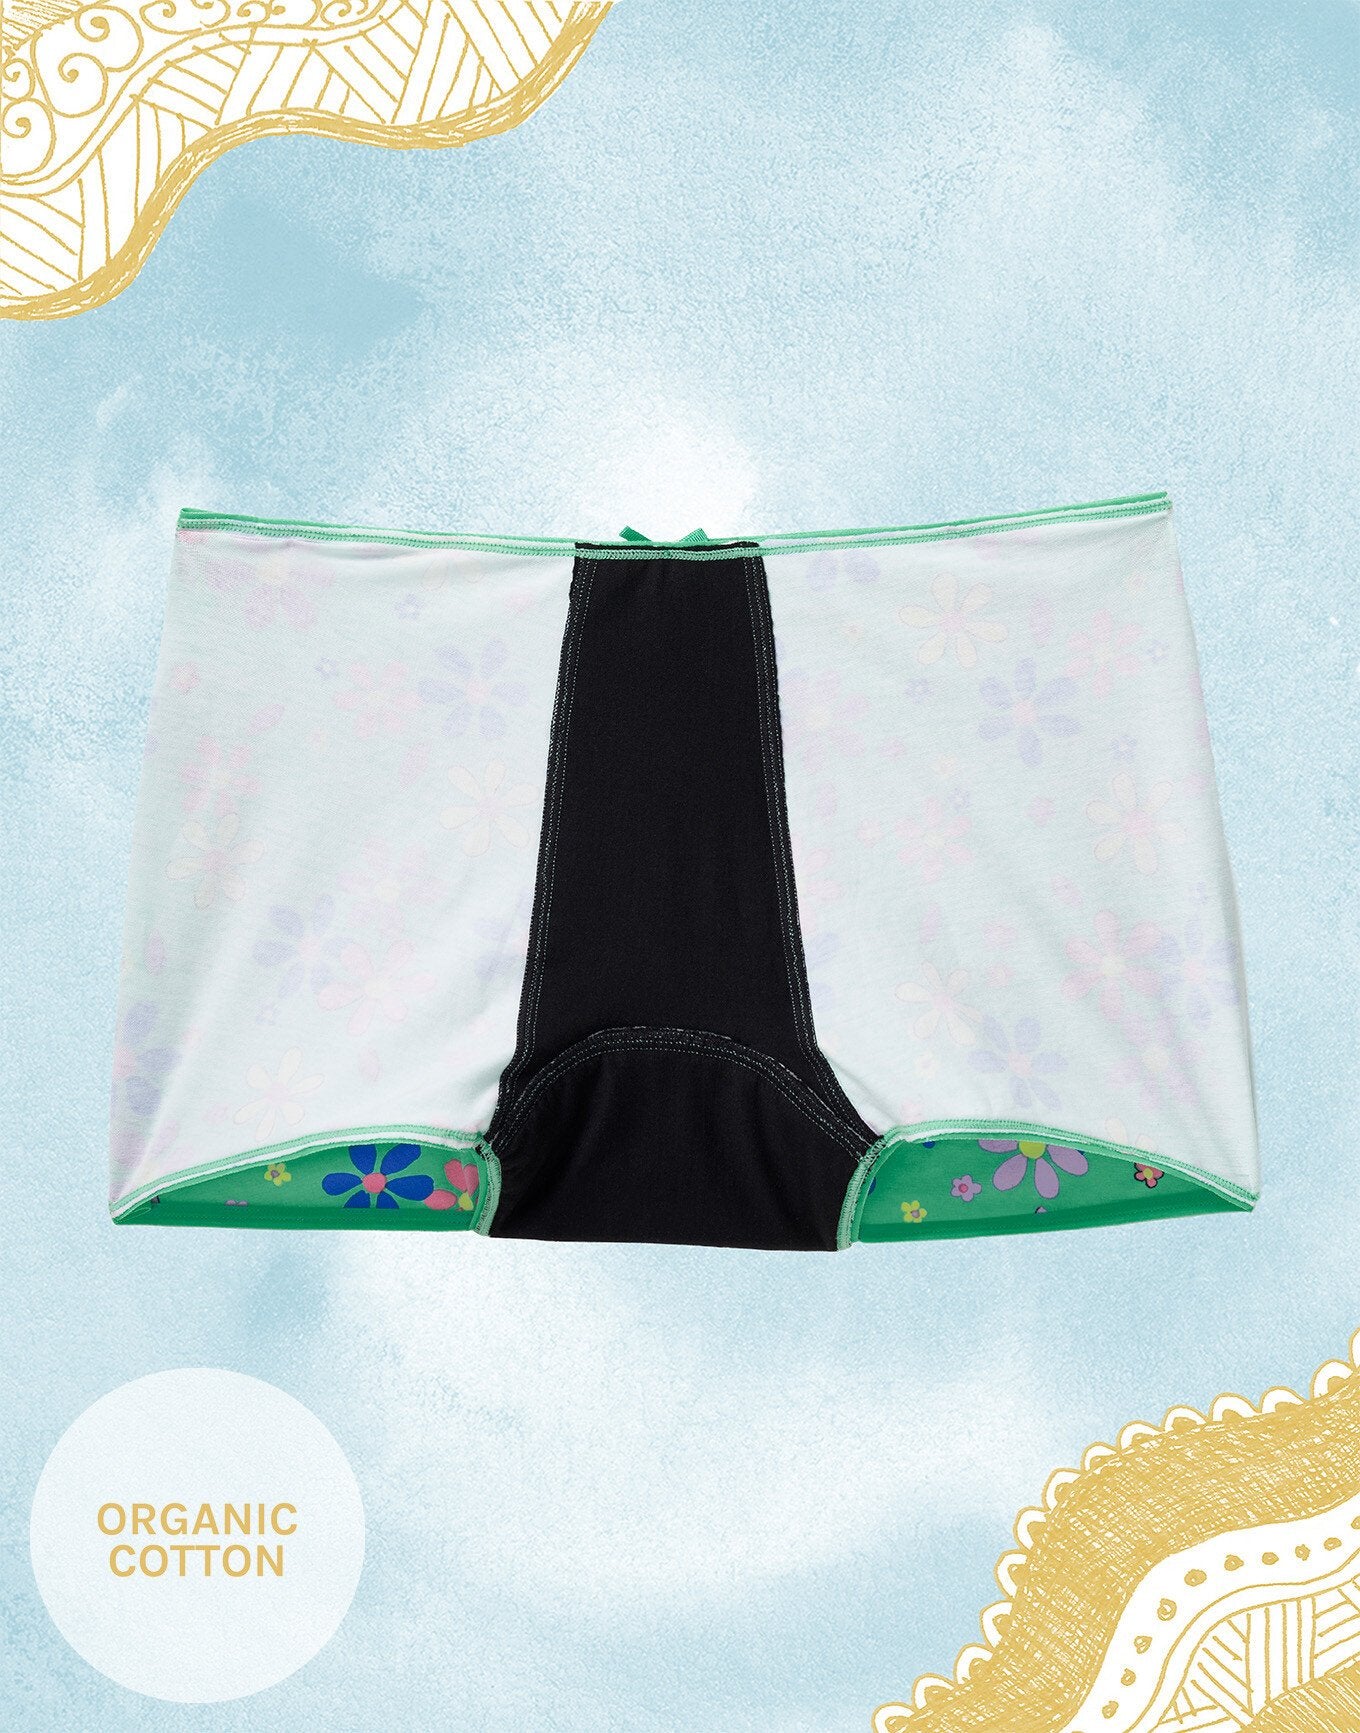 Joyja Aidan Teens period-proof panty in color Daisies C01 and shape shortie